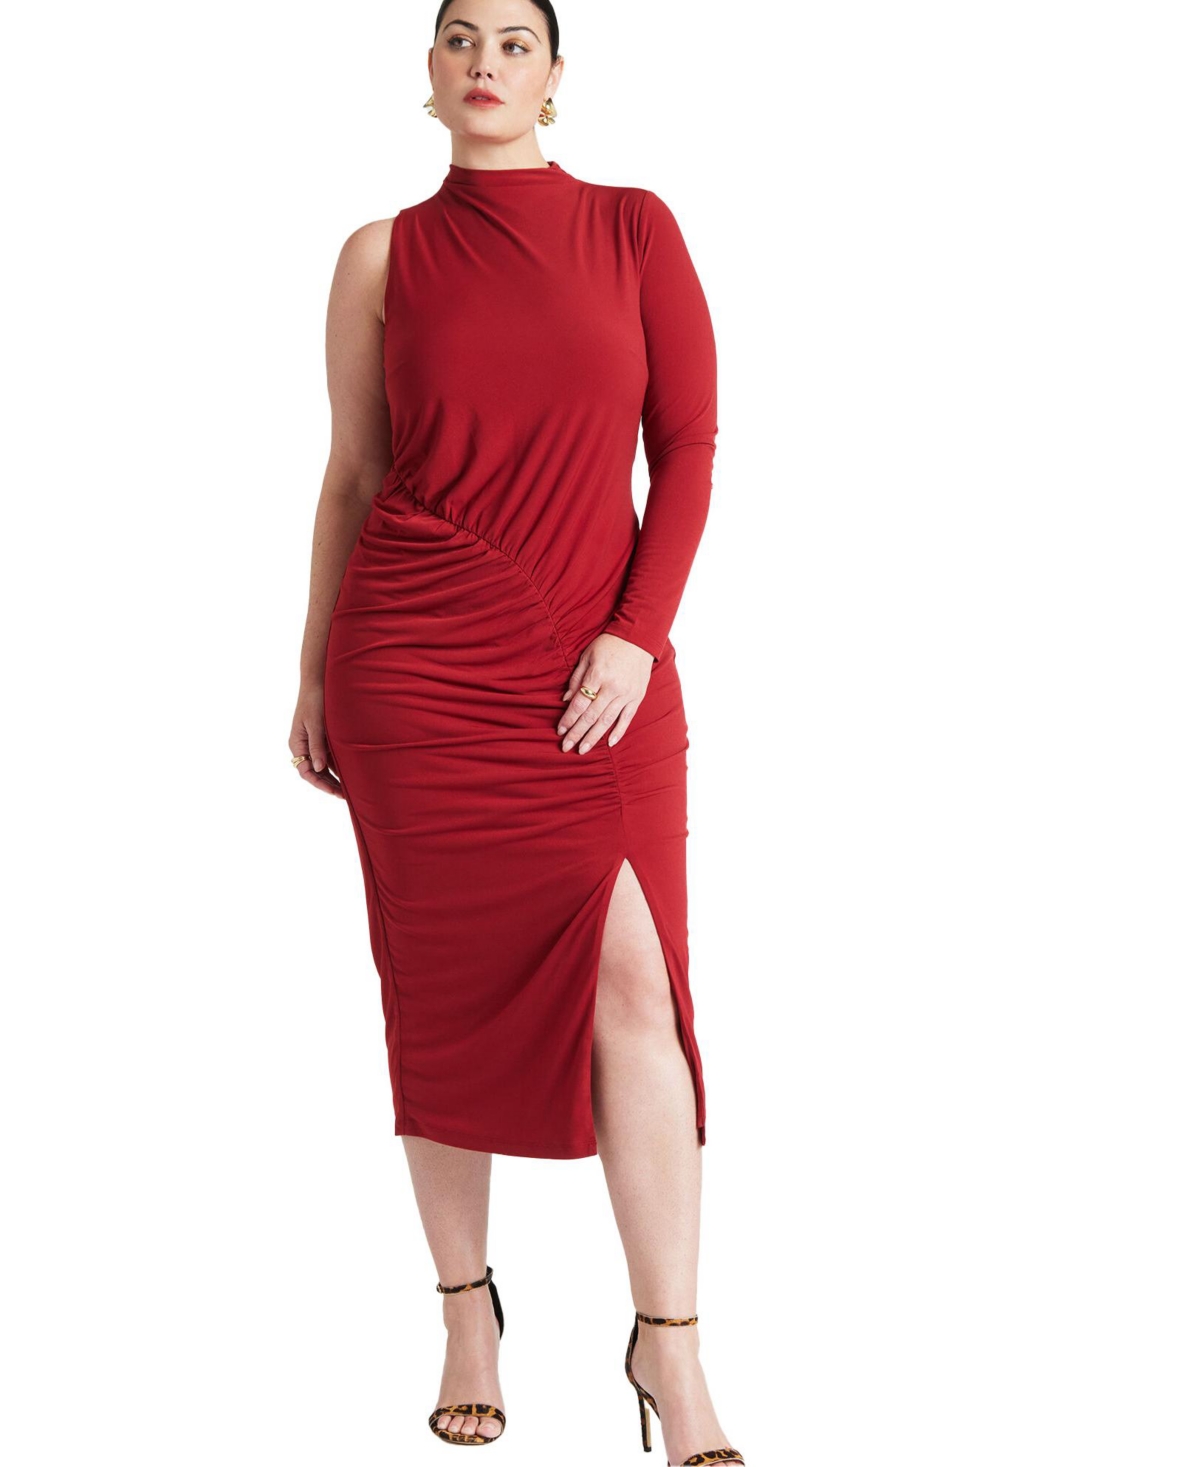 Plus Size One Shoulder Dress With Slit - Biking red